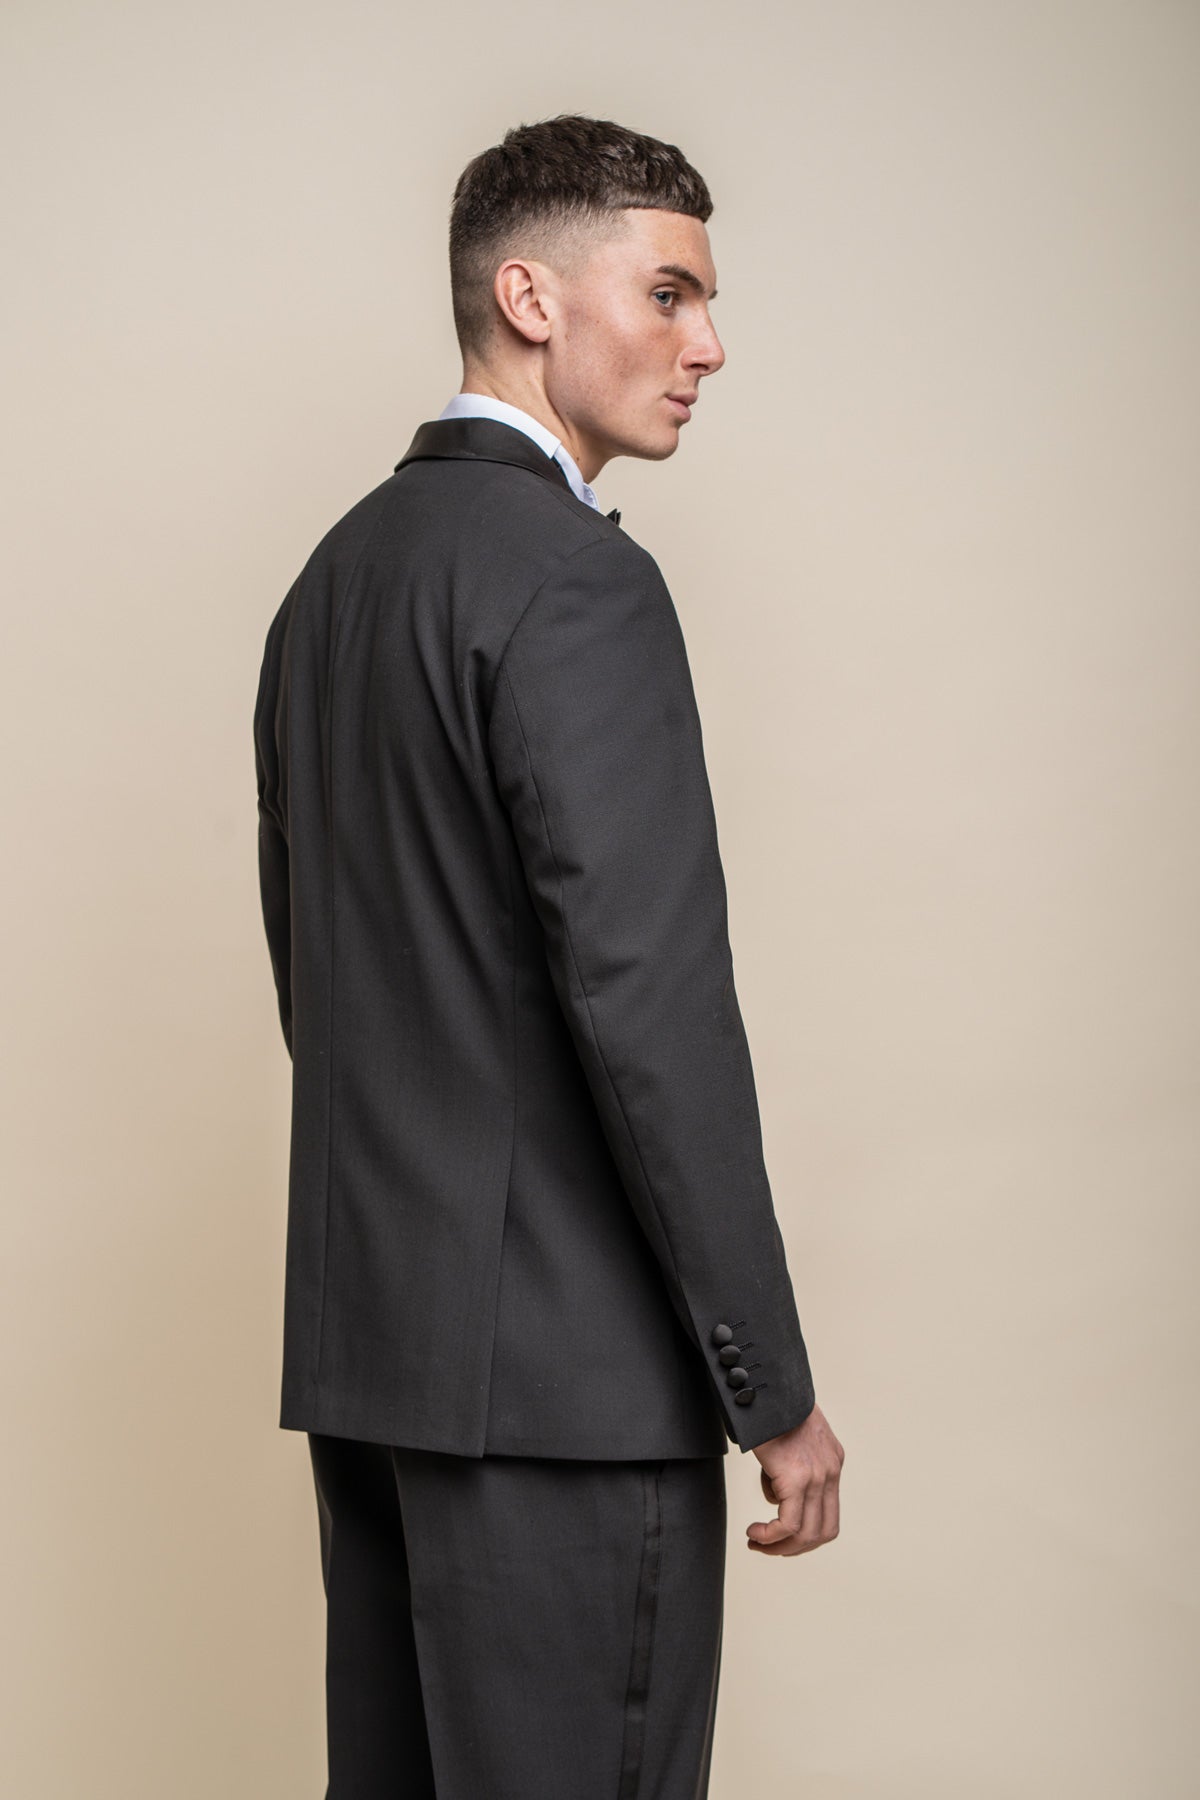 Aspen Black Tuxedo Wedding Suit Swatch - Swatch - - Swagger & Swoon